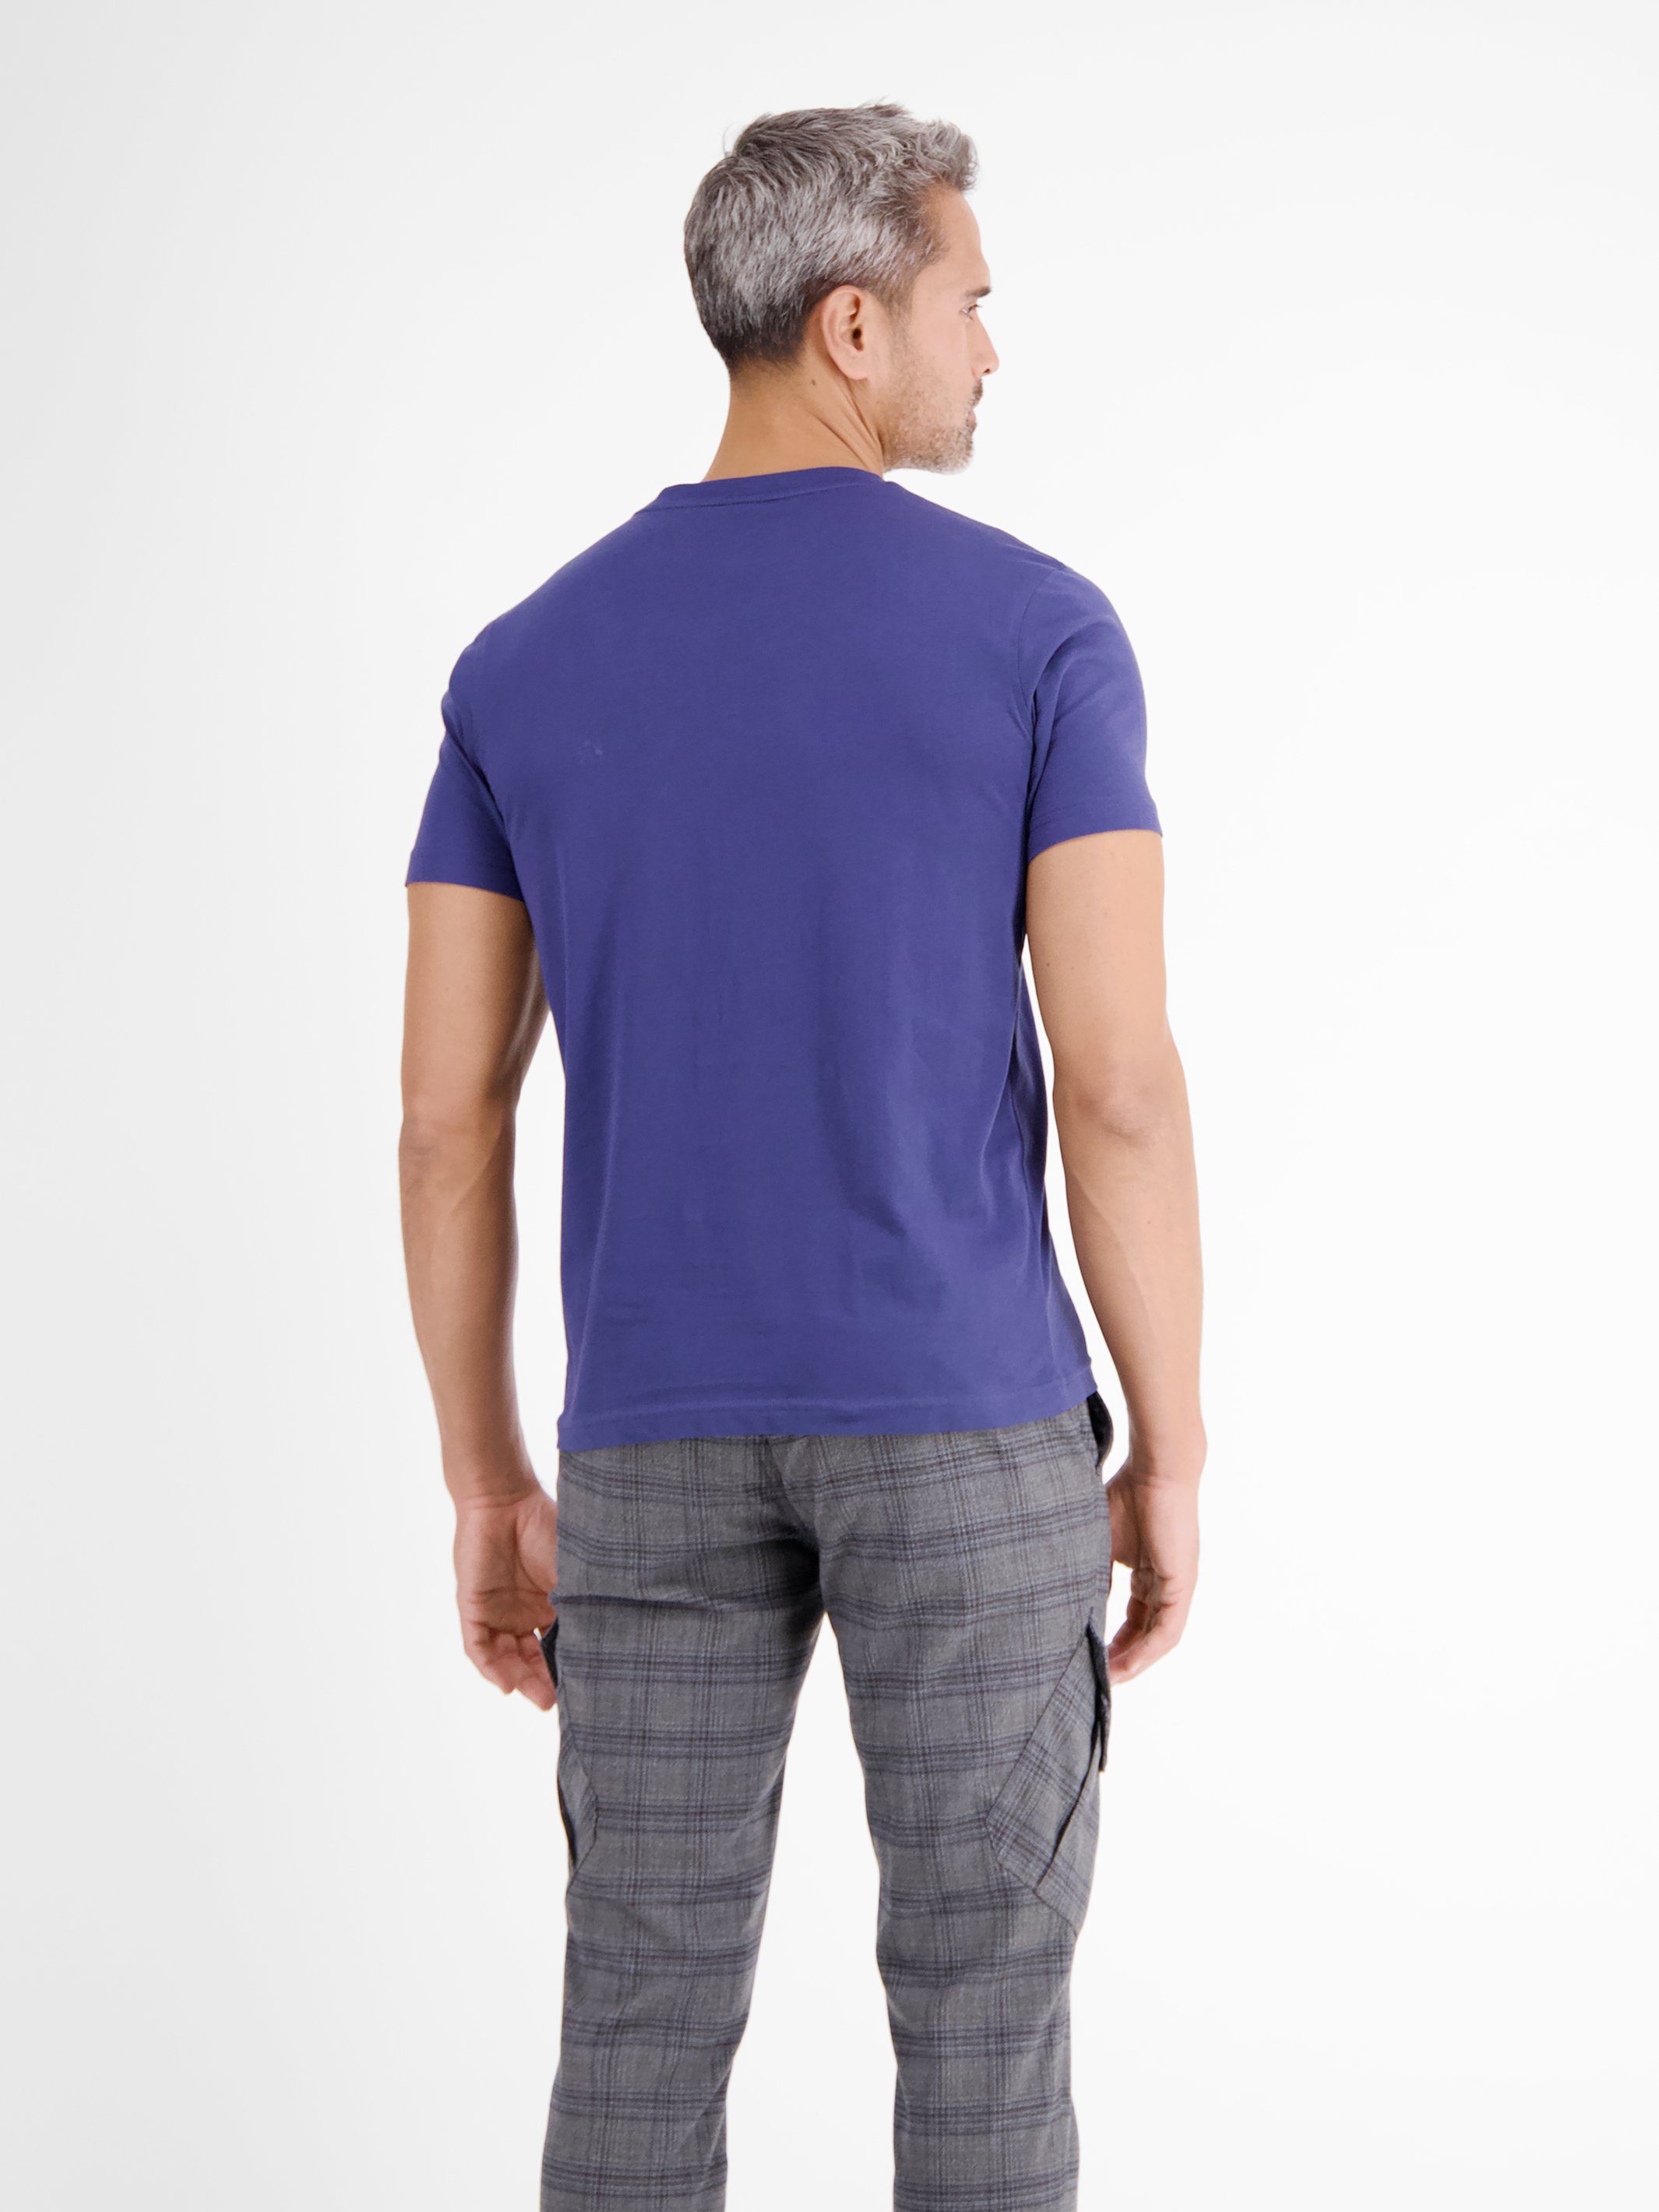 LERROS LERROS mit BLUE T-Shirt VINTAGE T-Shirt O-Neck